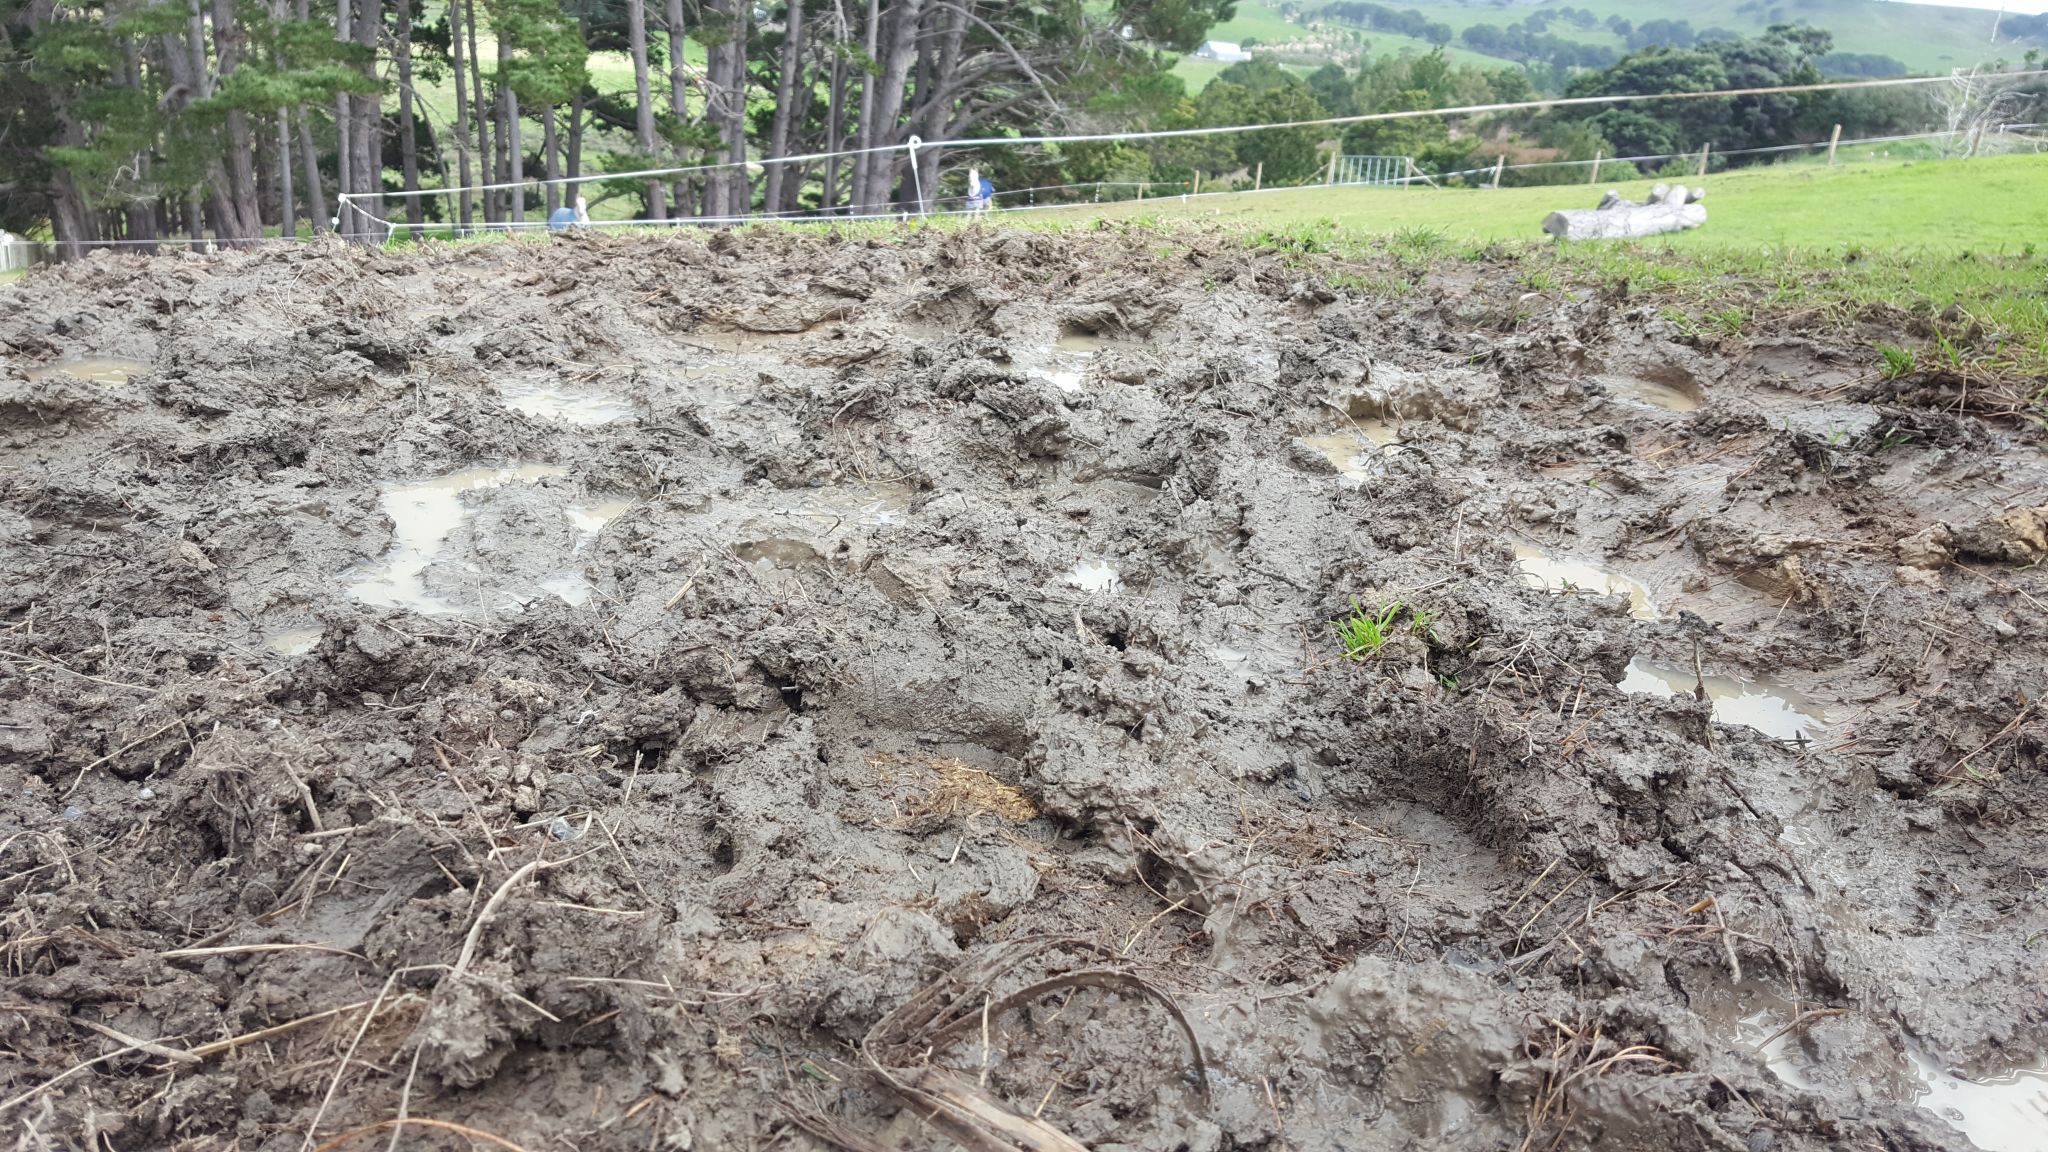 The paddocks are slowly turning muddy